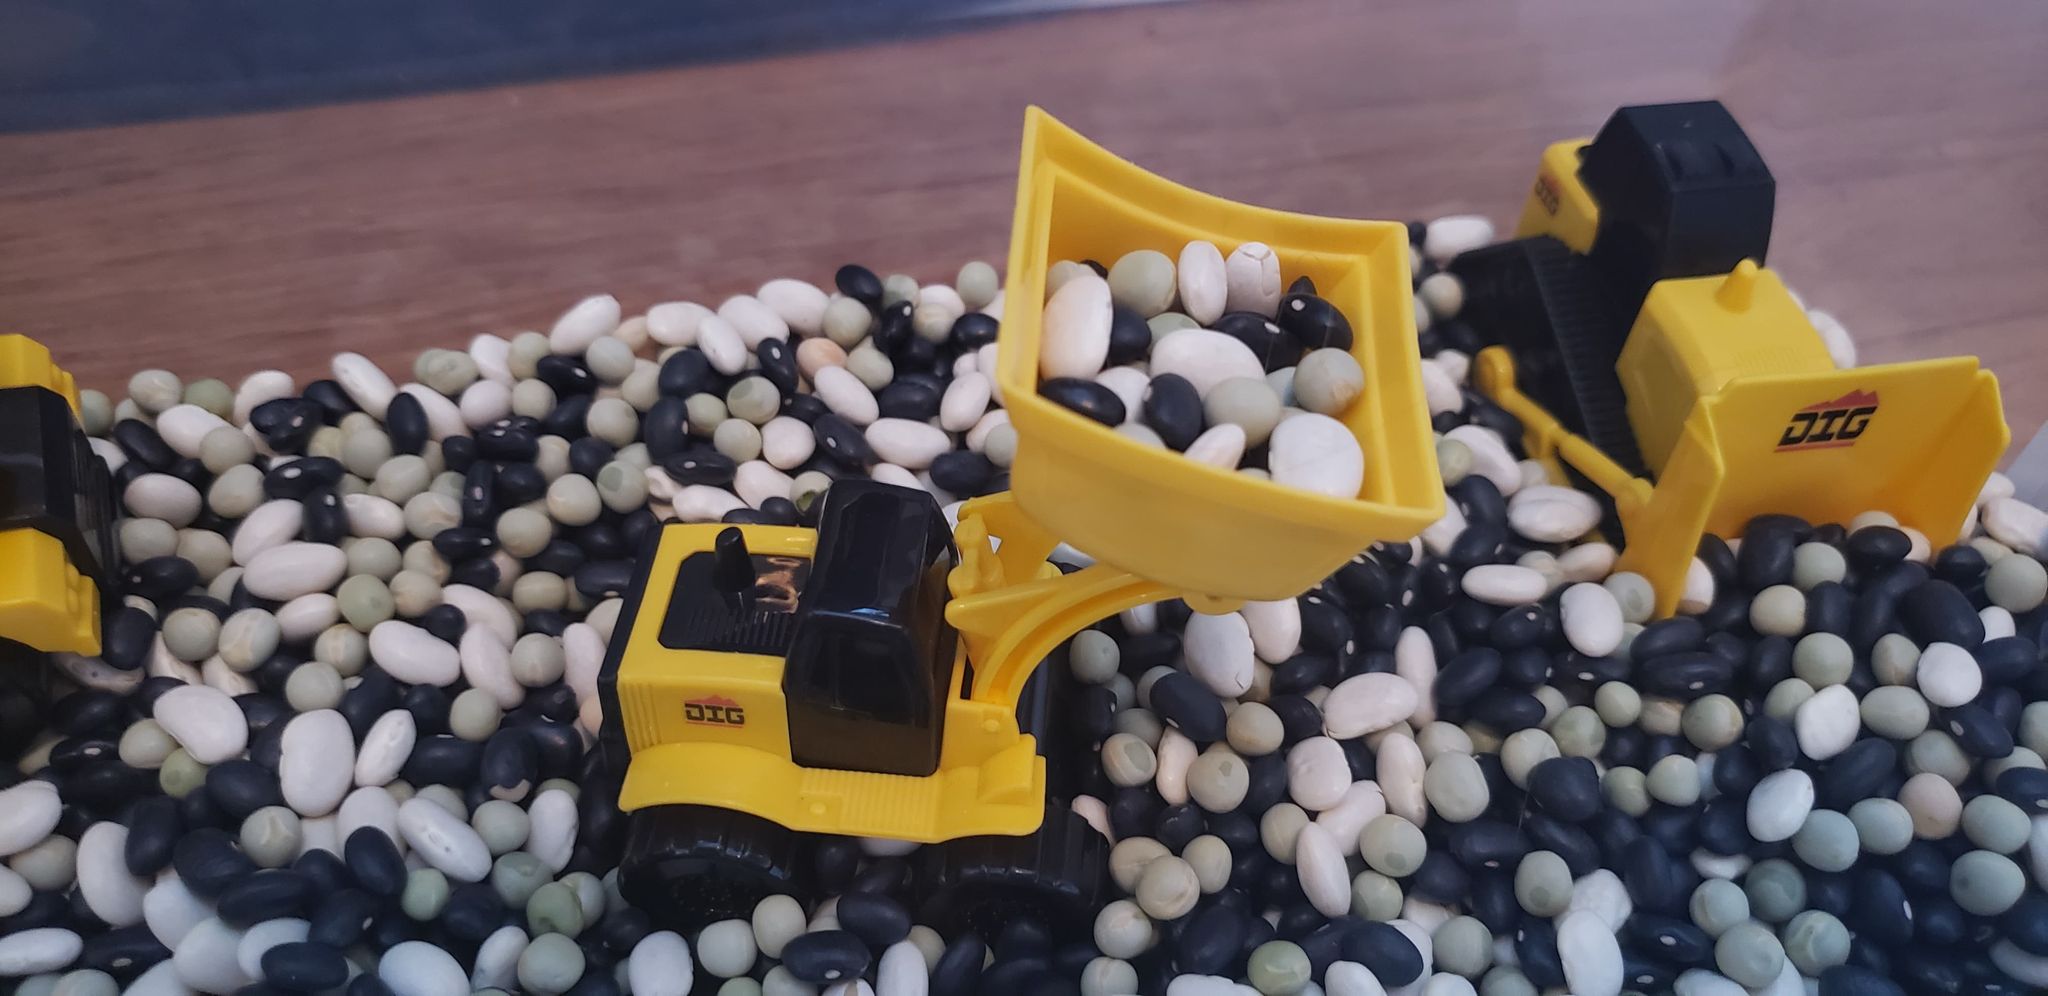 mini bulldozer lifting dry beans